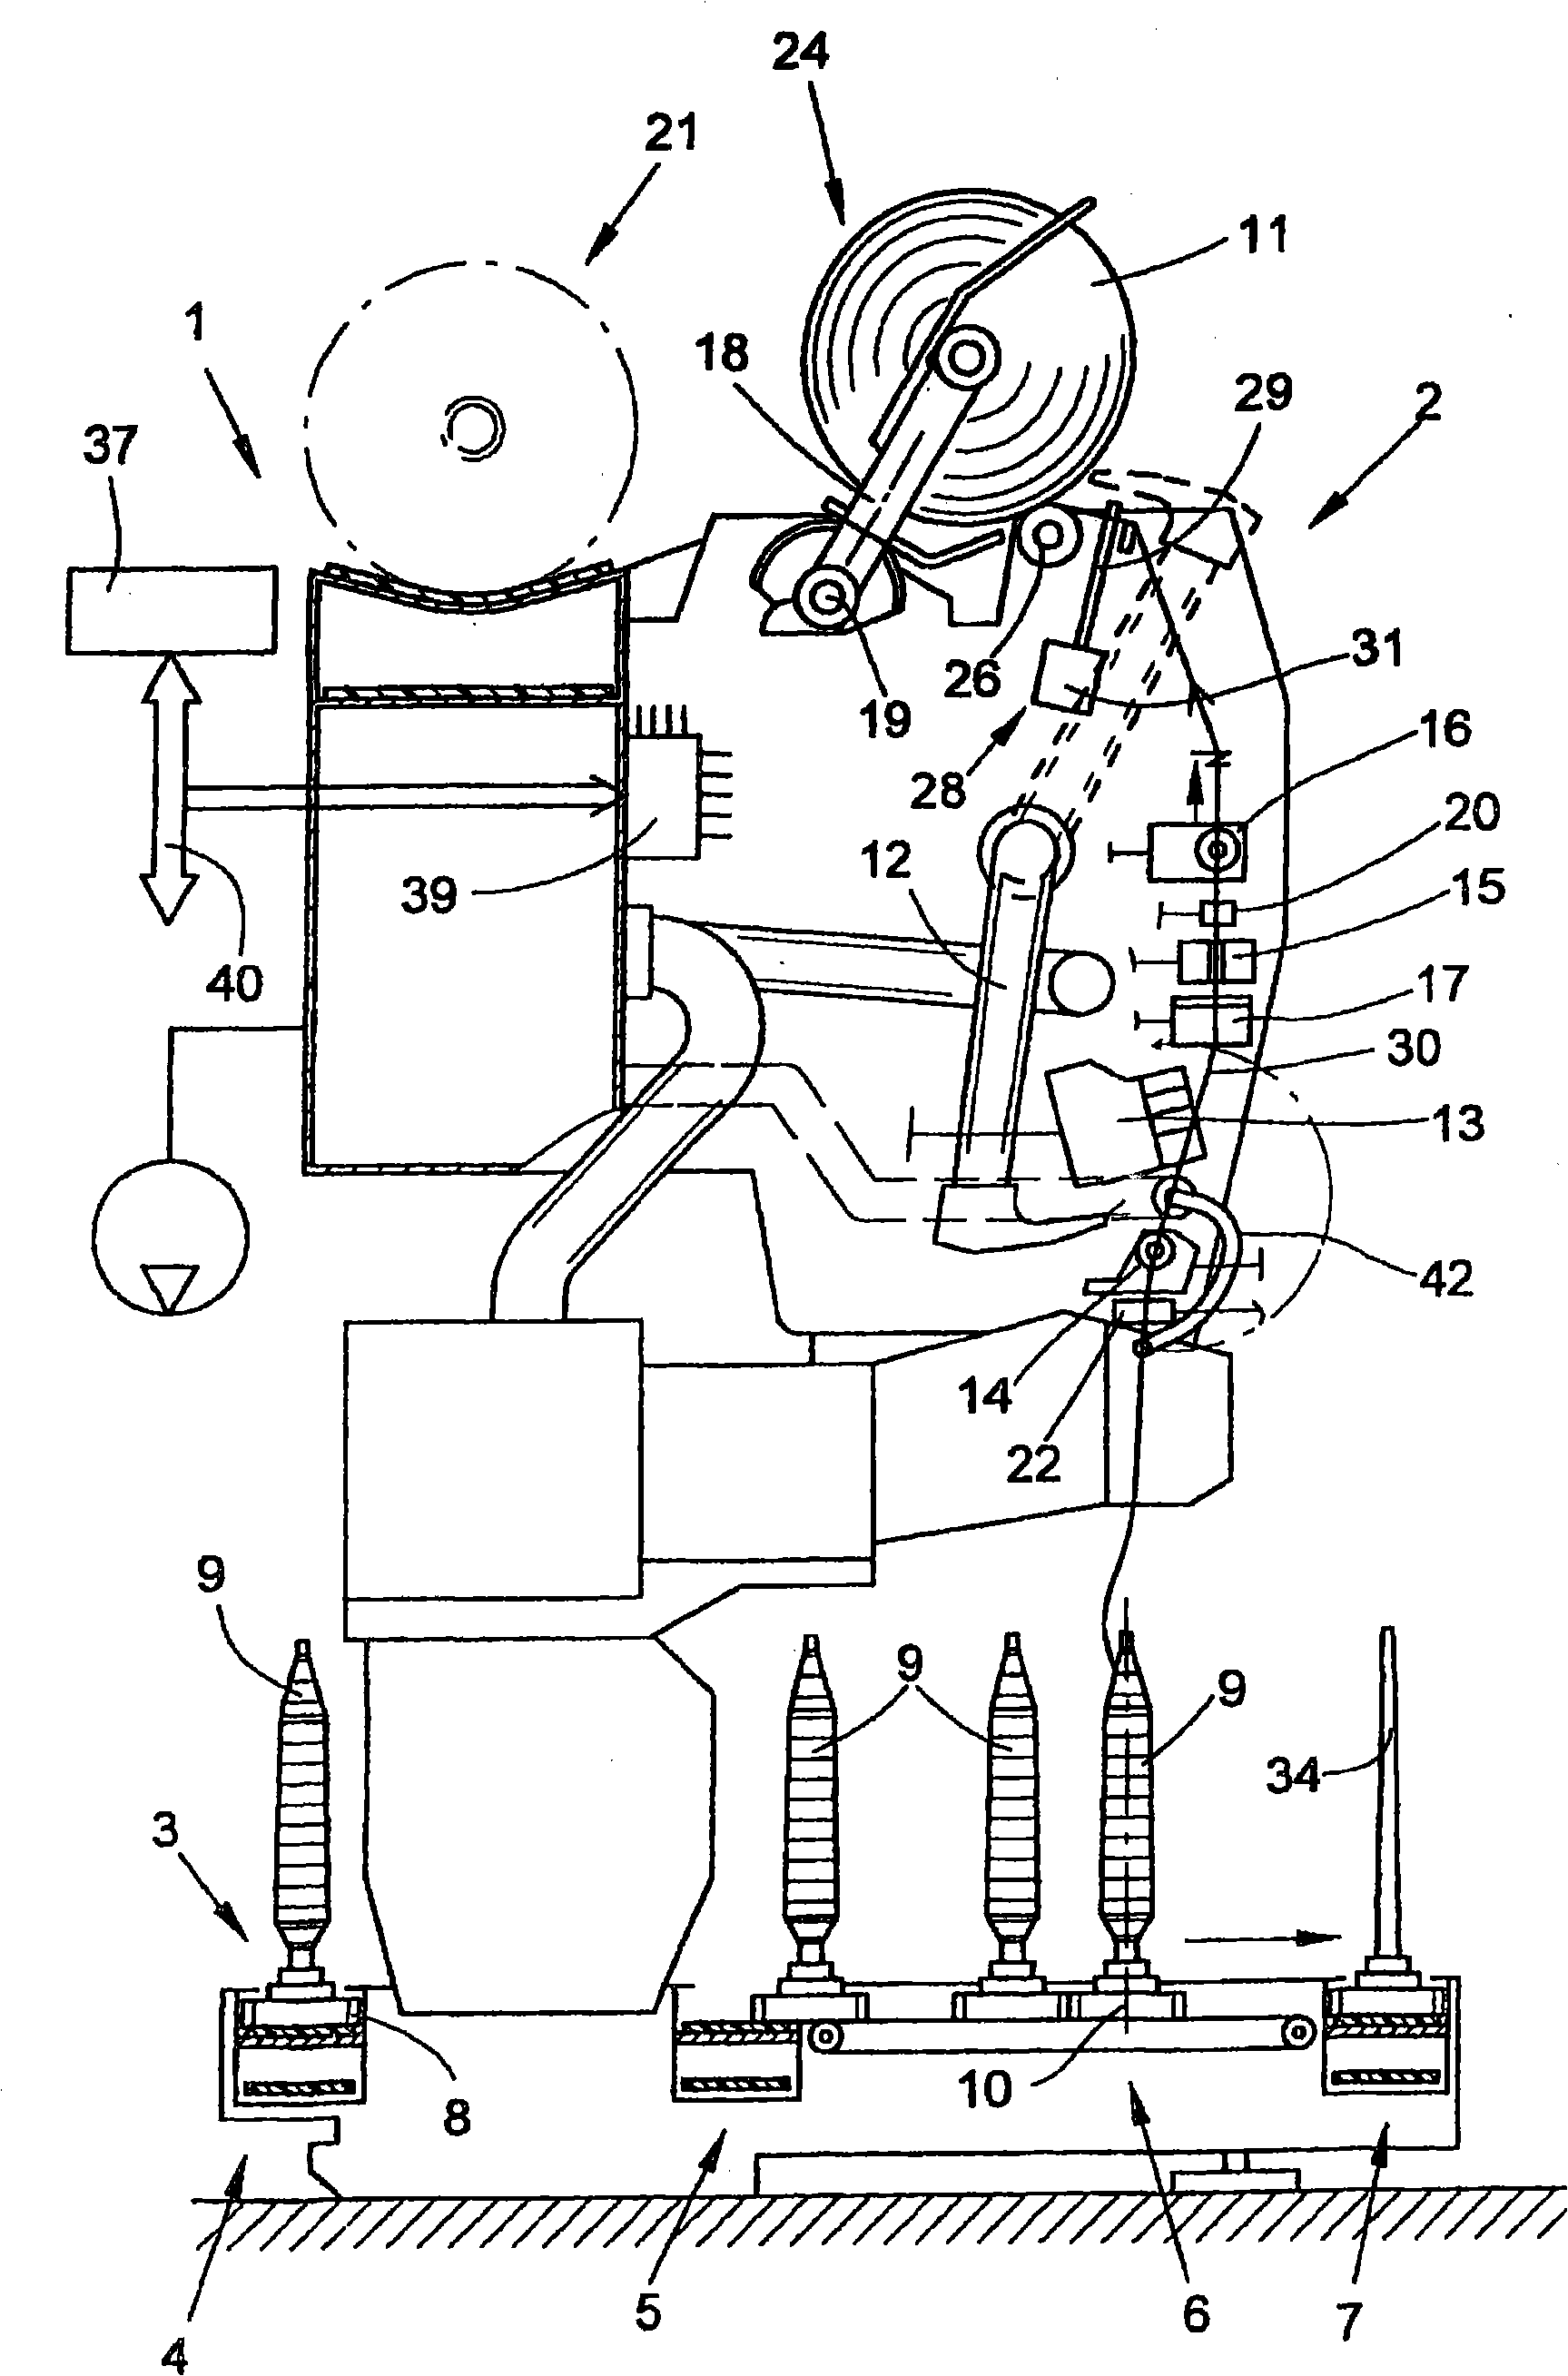 Bobbin brake for a winding apparatus of a textile machine which produces crosswound bobbins